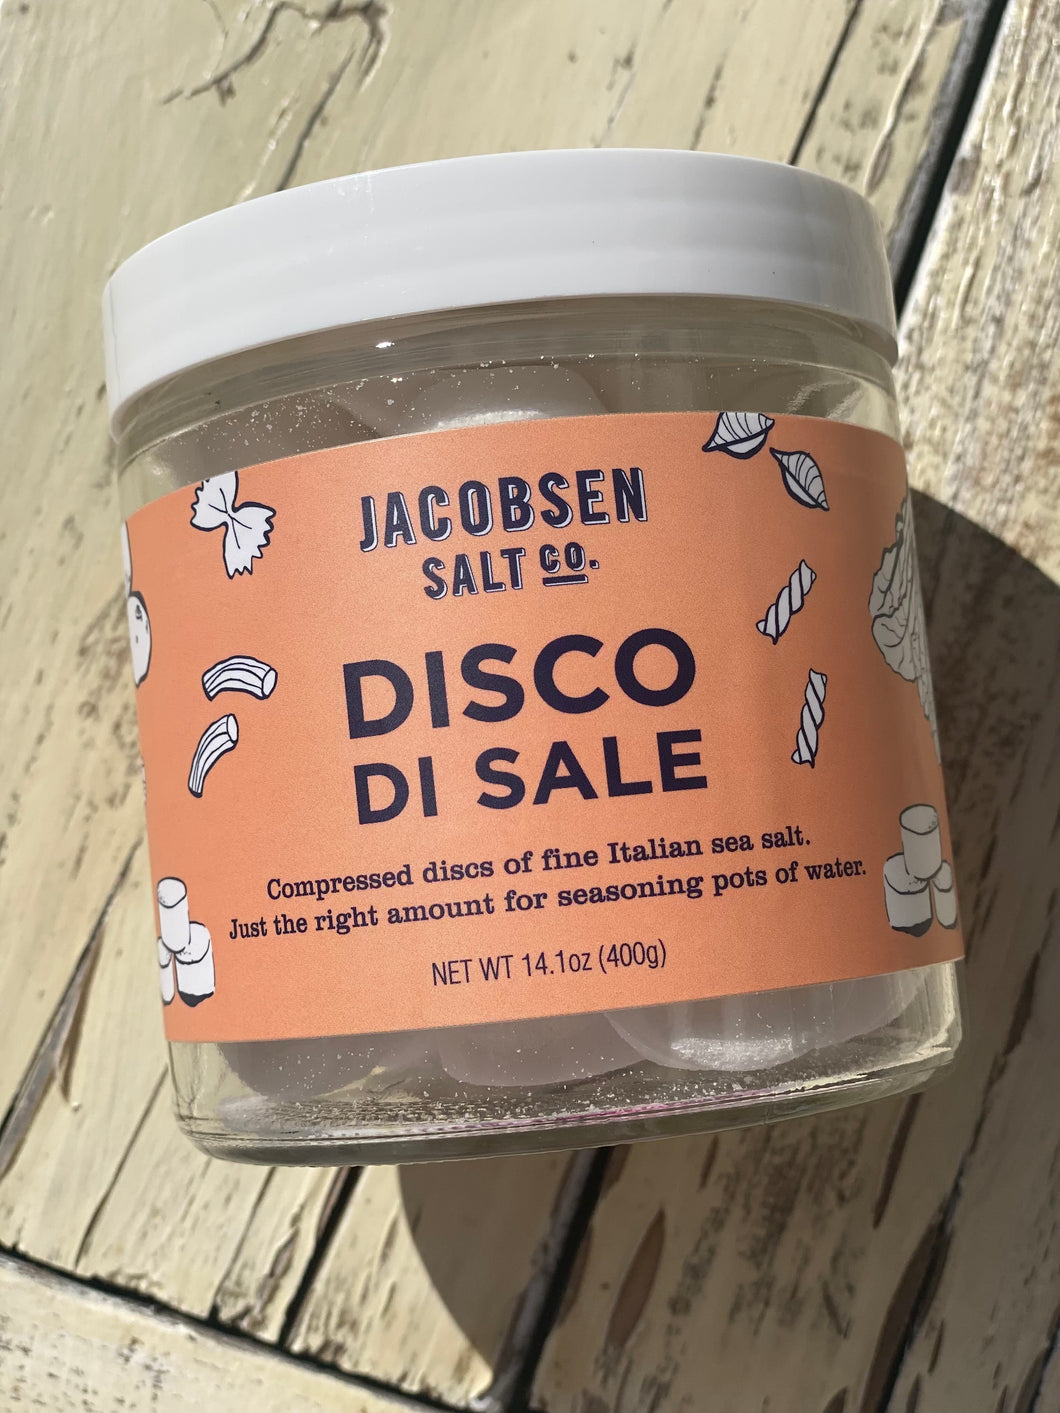 Jacobsen Salt Co Disco Di Sale